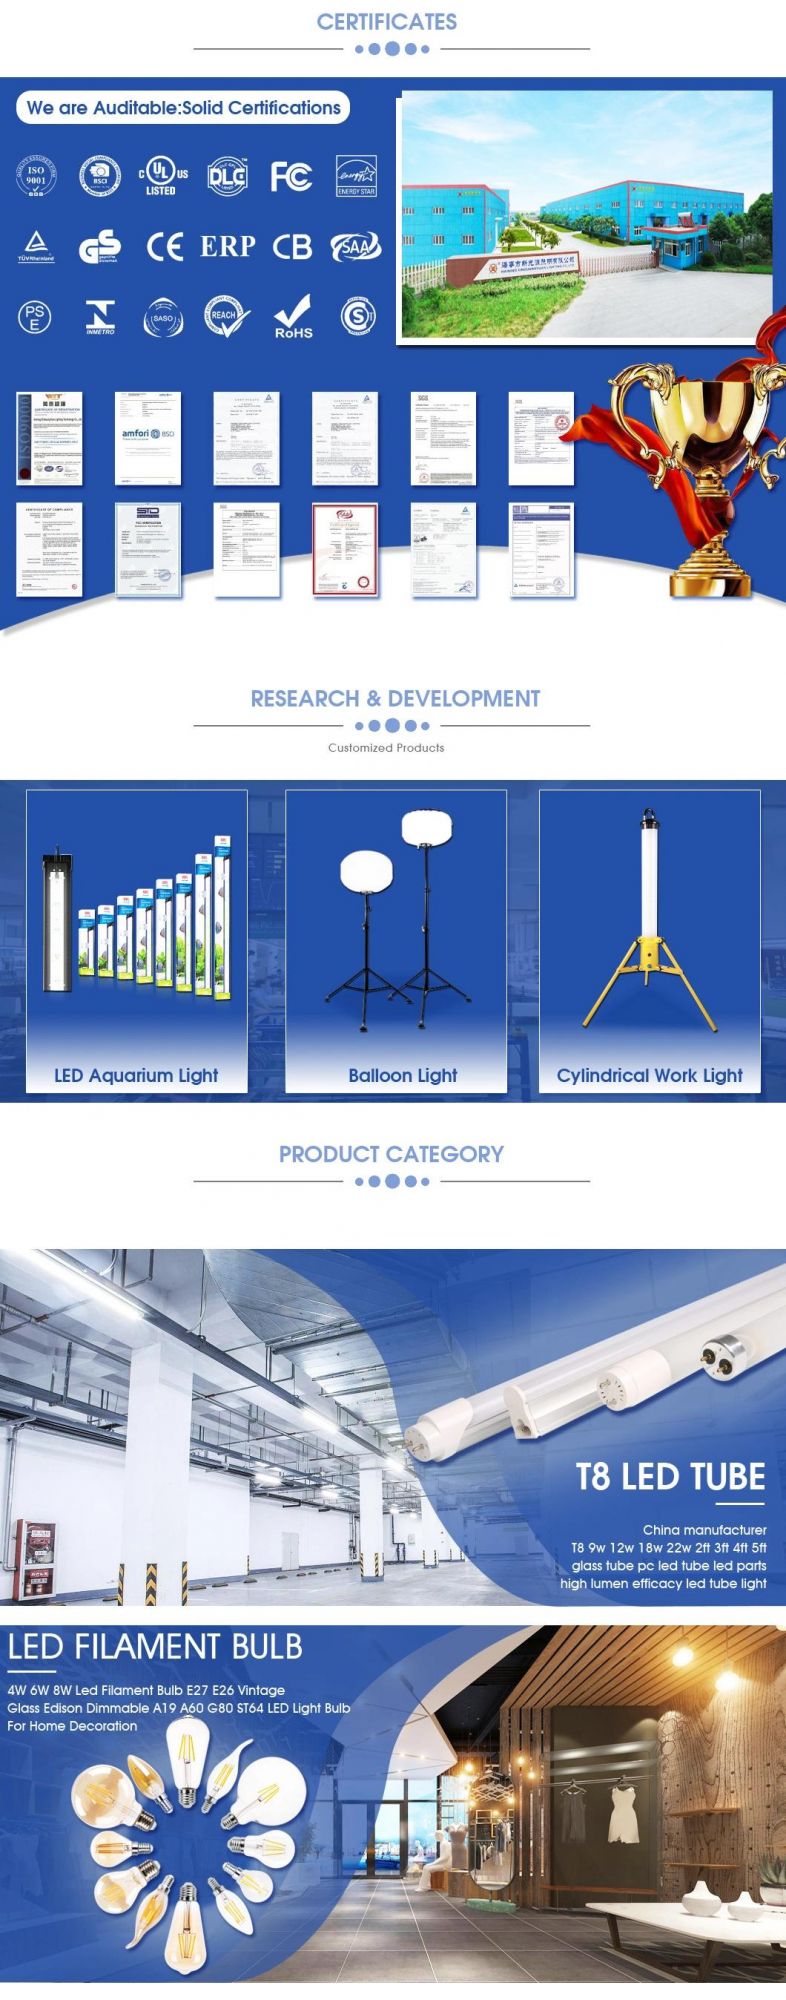 China Supplier Soft Filament Flexible LED Bulb Filament Lamp for Indoor Light